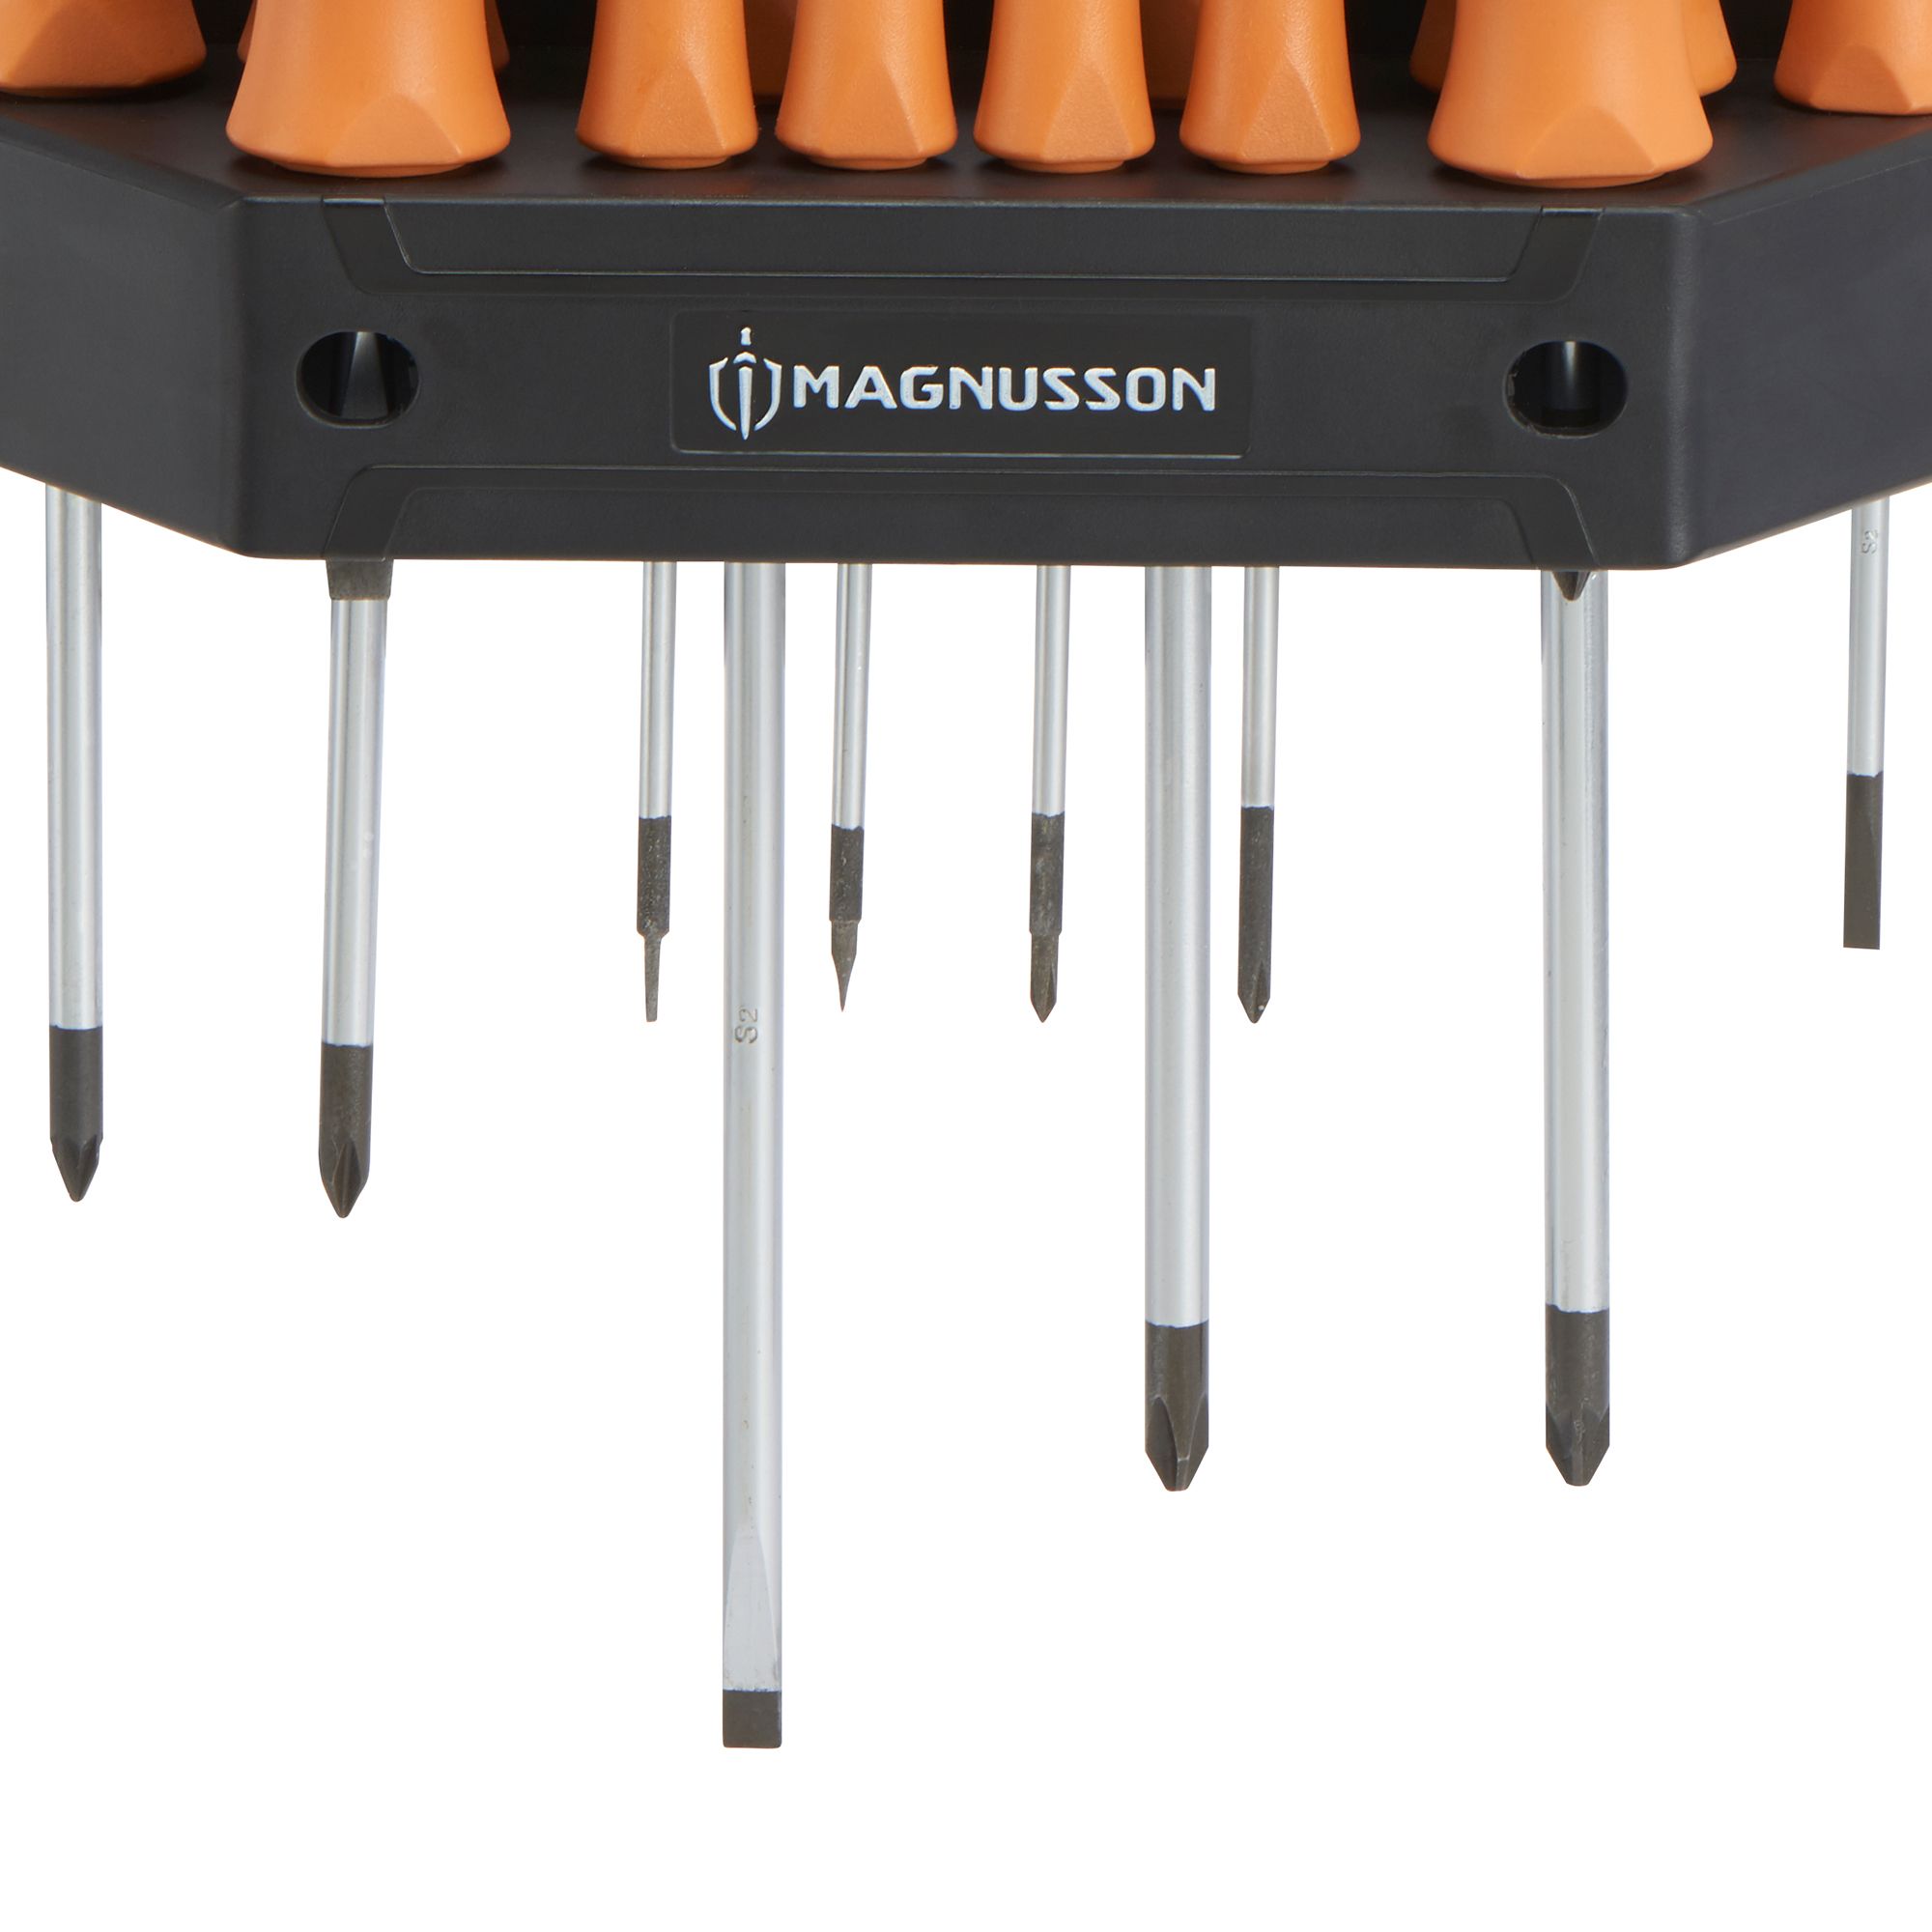 Magnusson 12 piece Standard Mixed Screwdriver set